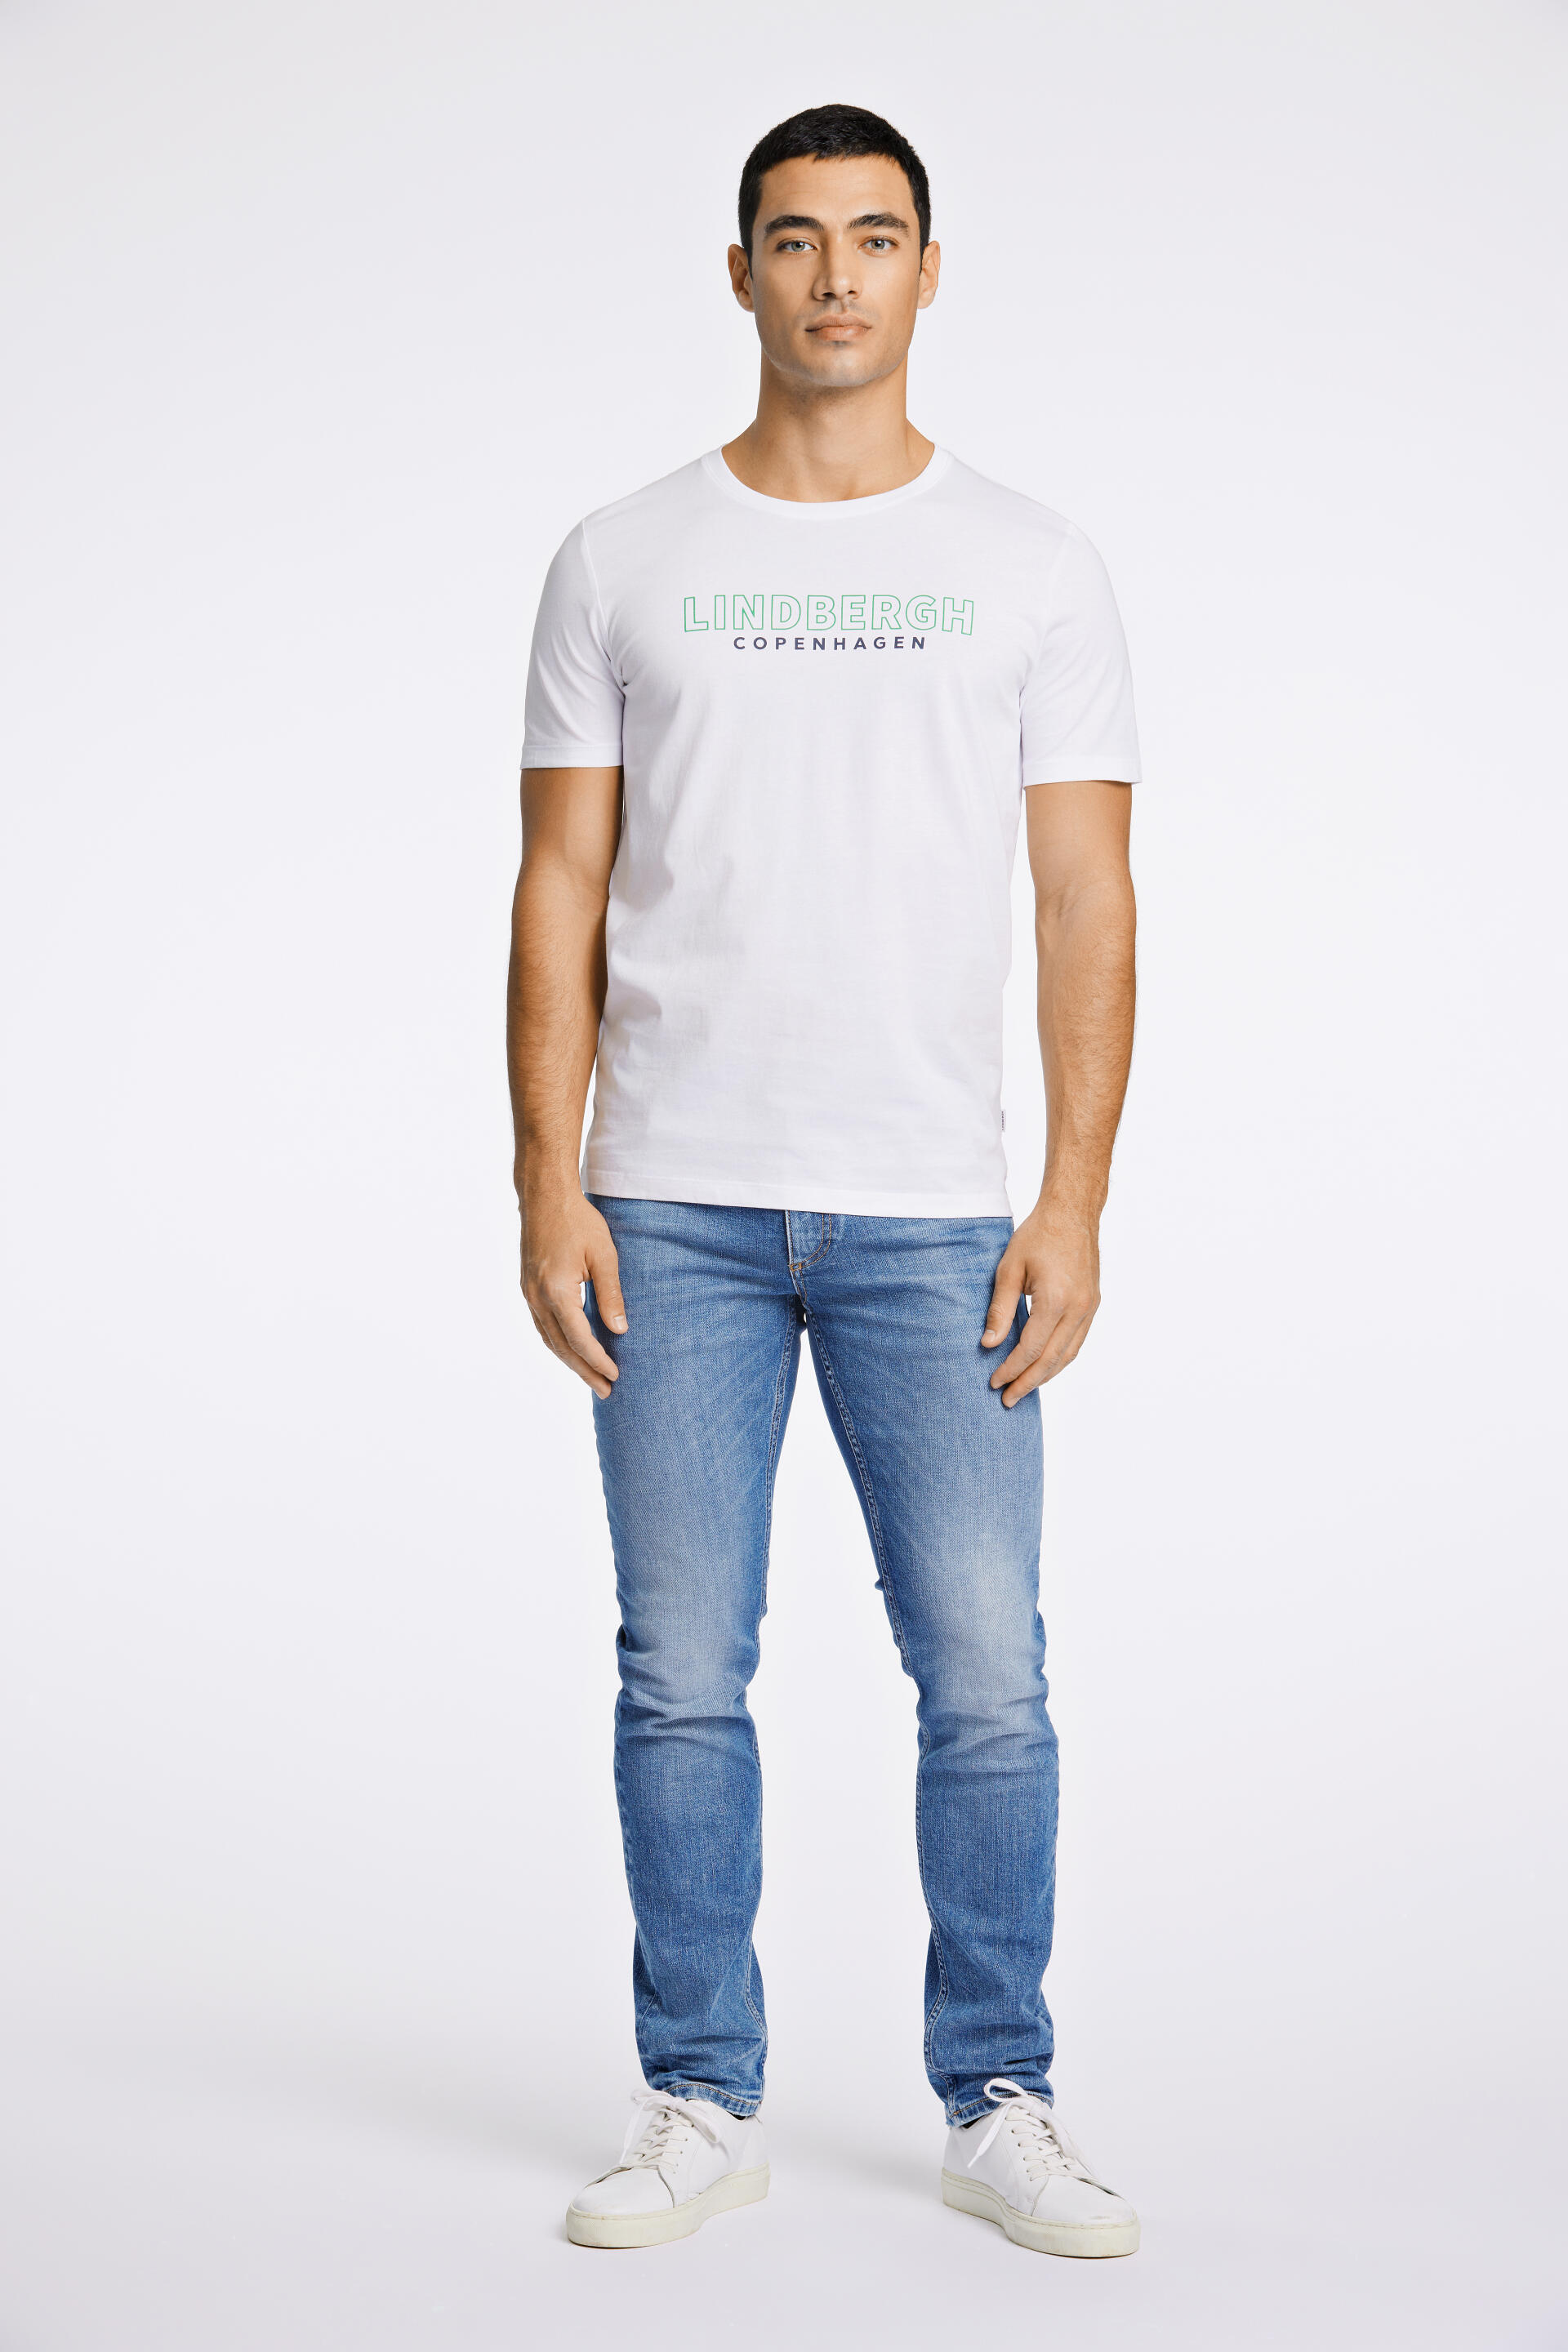 Lindbergh  T-shirt 30-400228